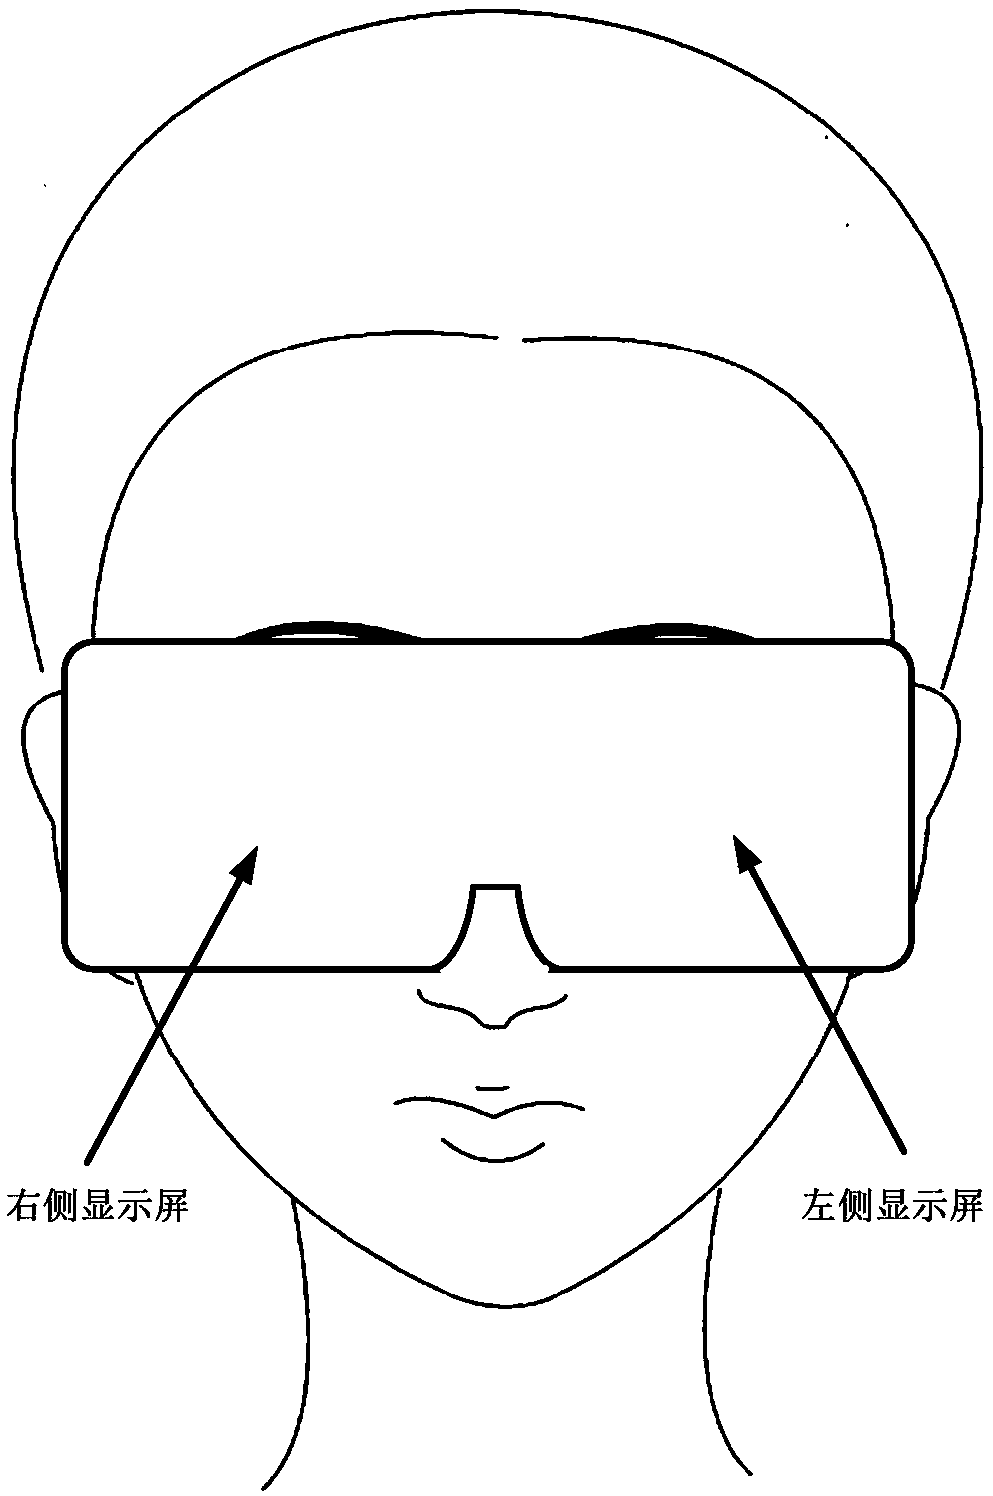 A virtual reality display method, device and virtual reality glasses